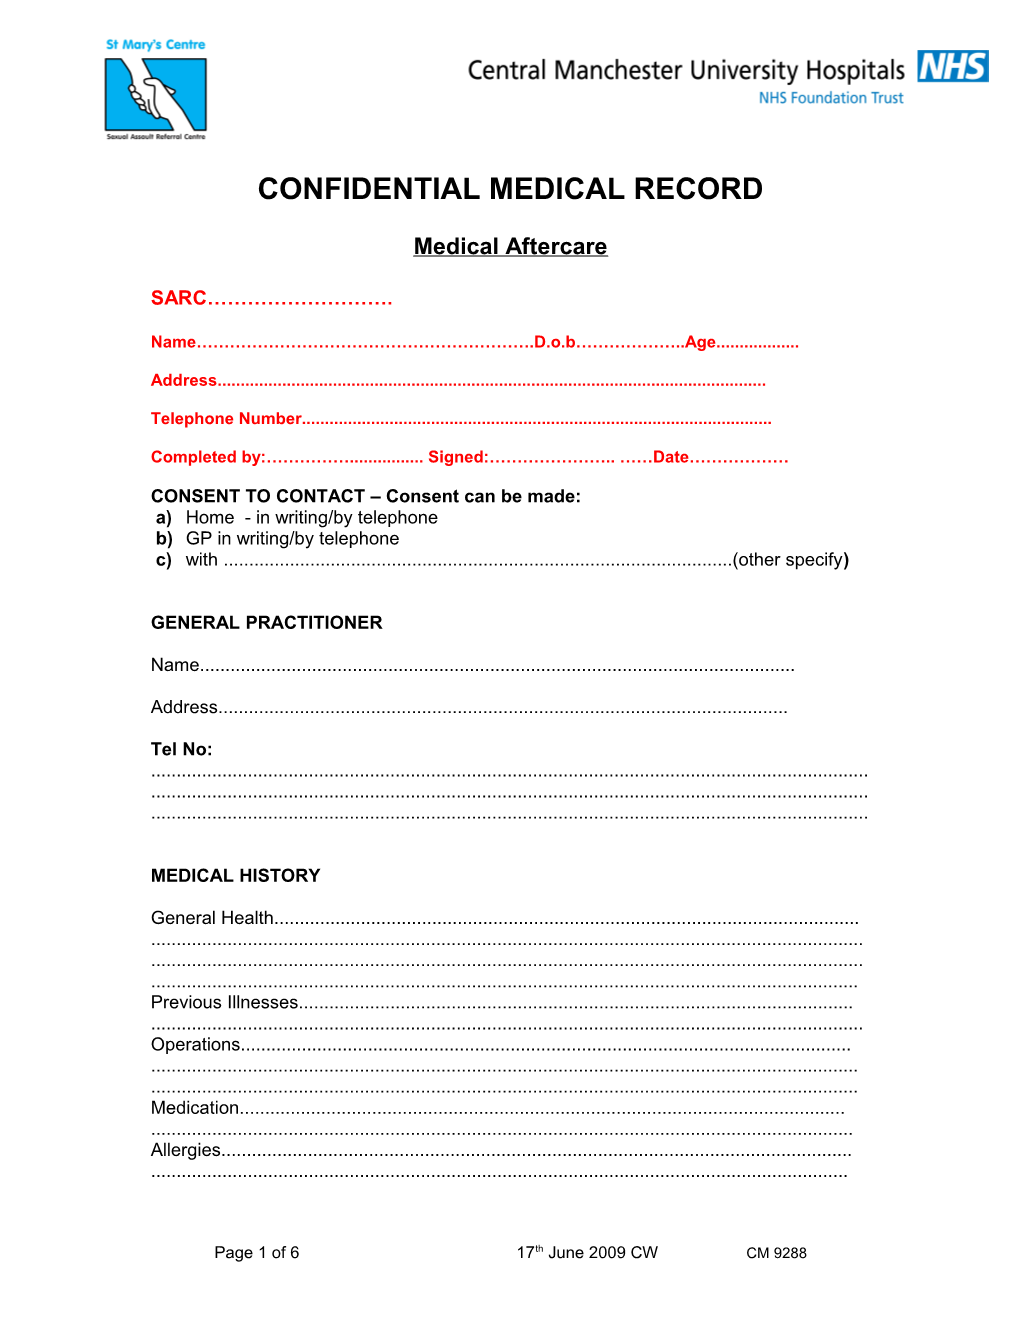 Confidential Medical Record